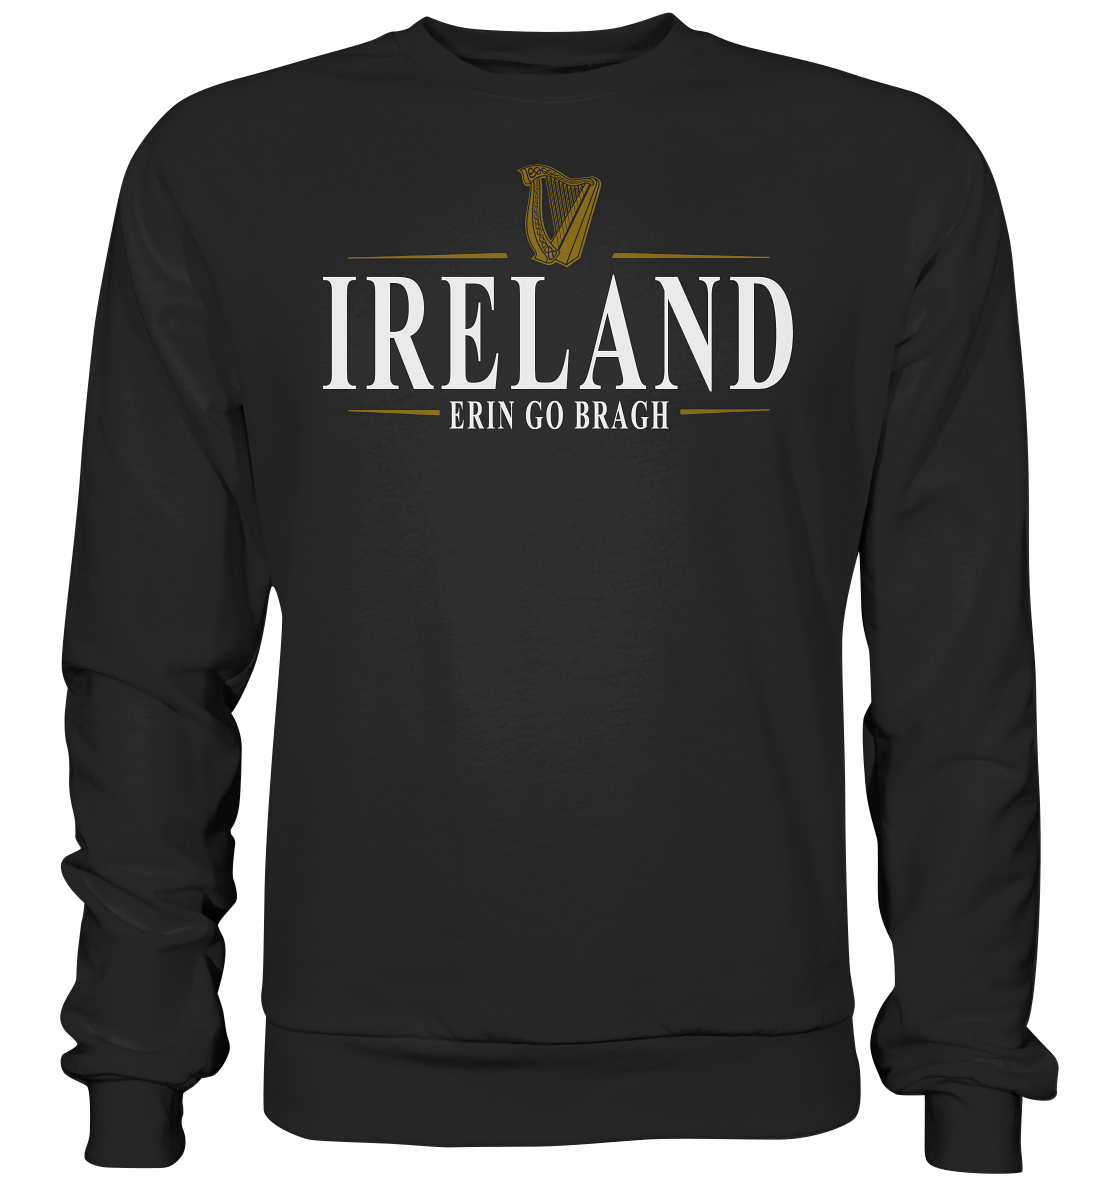 Ireland "Erin Go Bragh" - Premium Sweatshirt